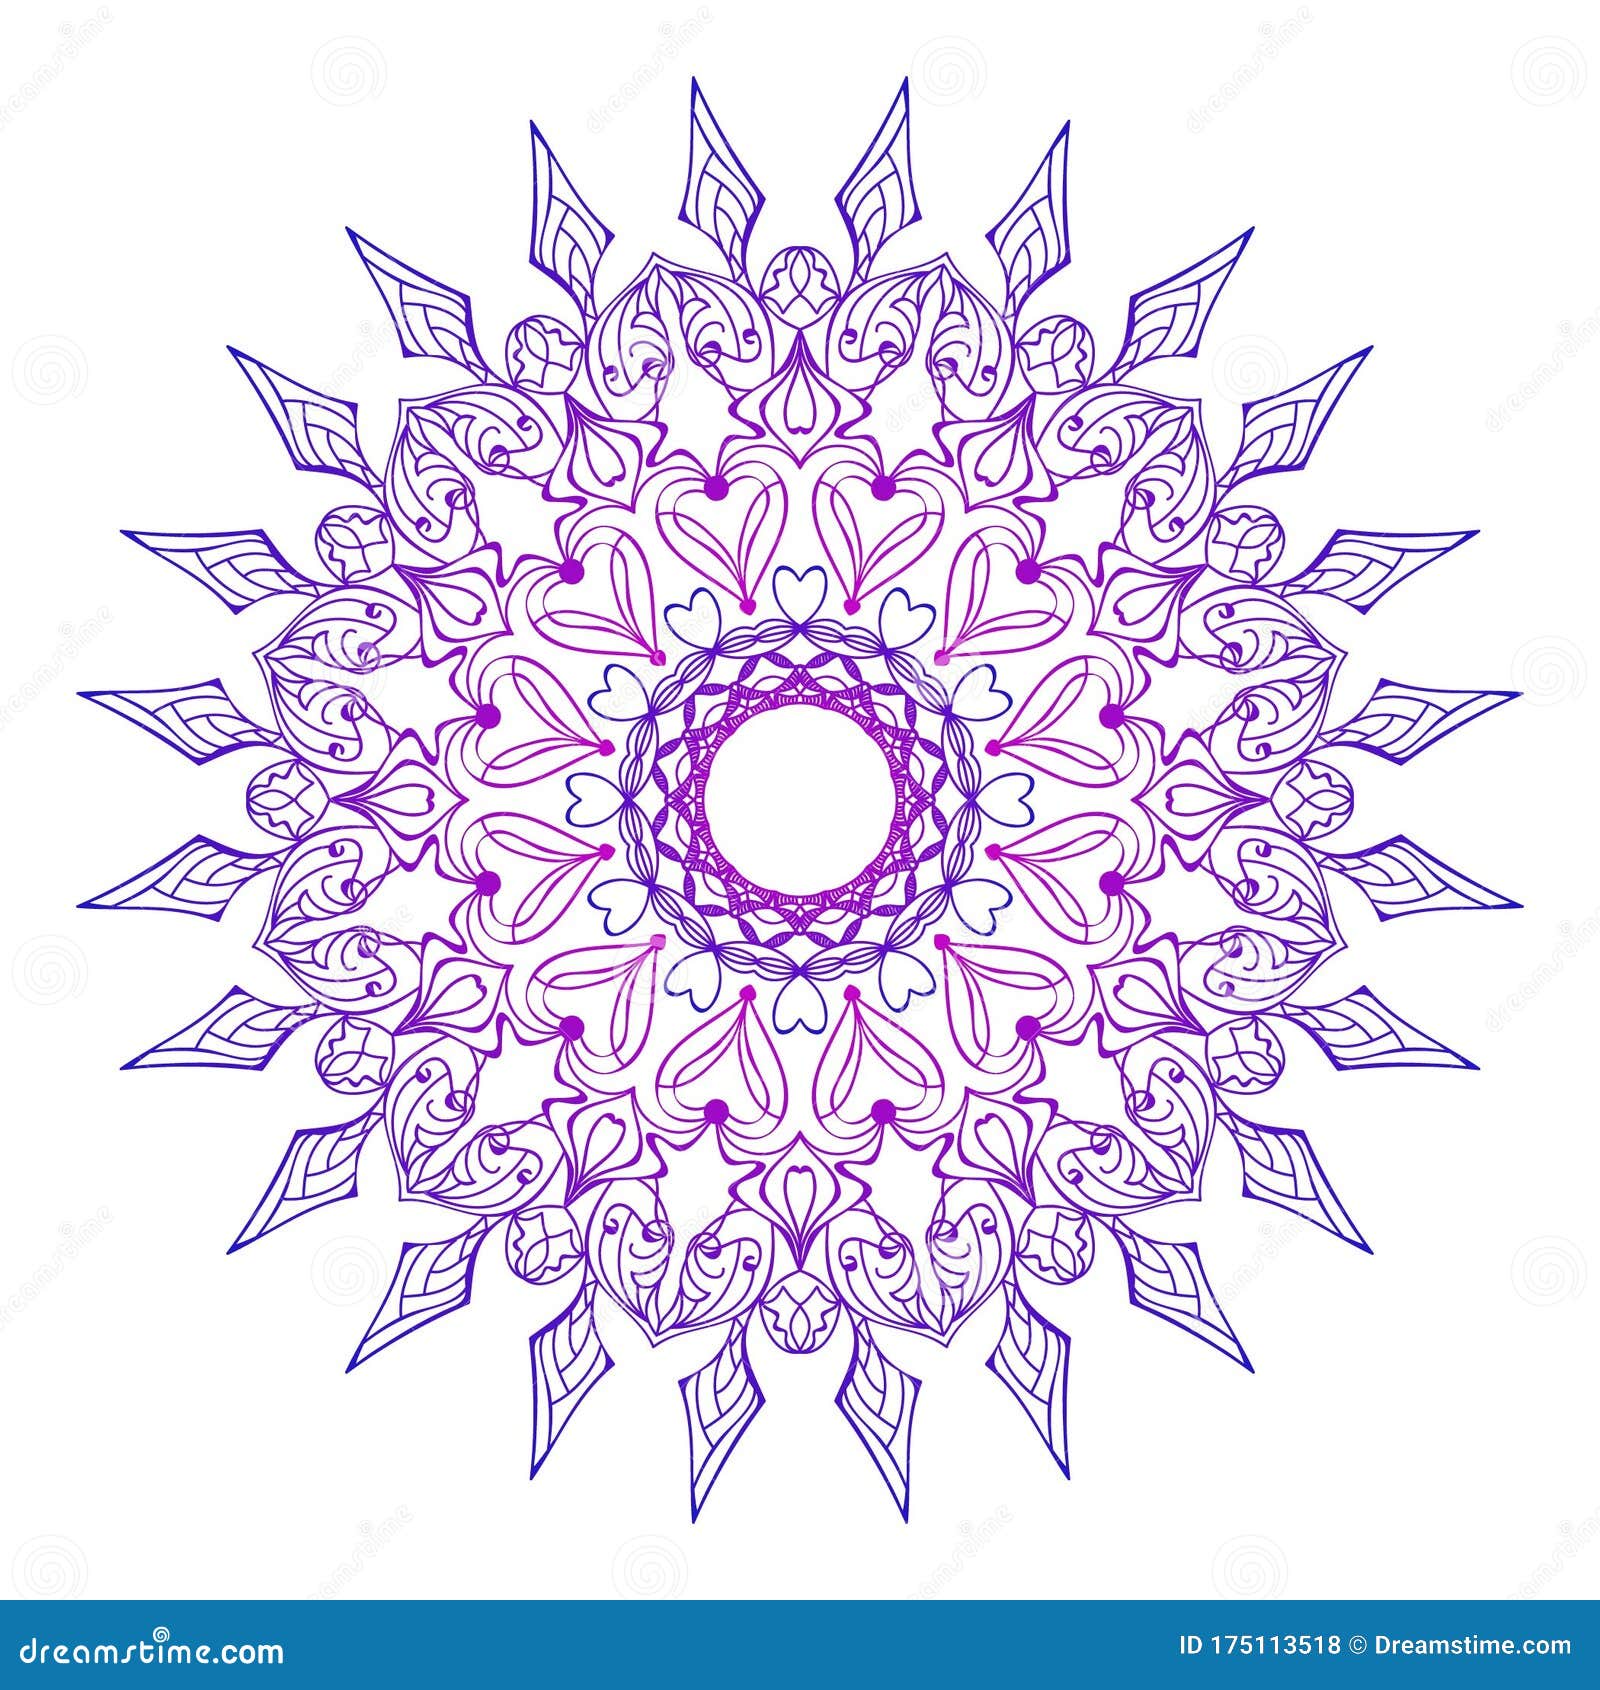 Download Vector Illustration Isolated Mandala Art Design Pattern ...